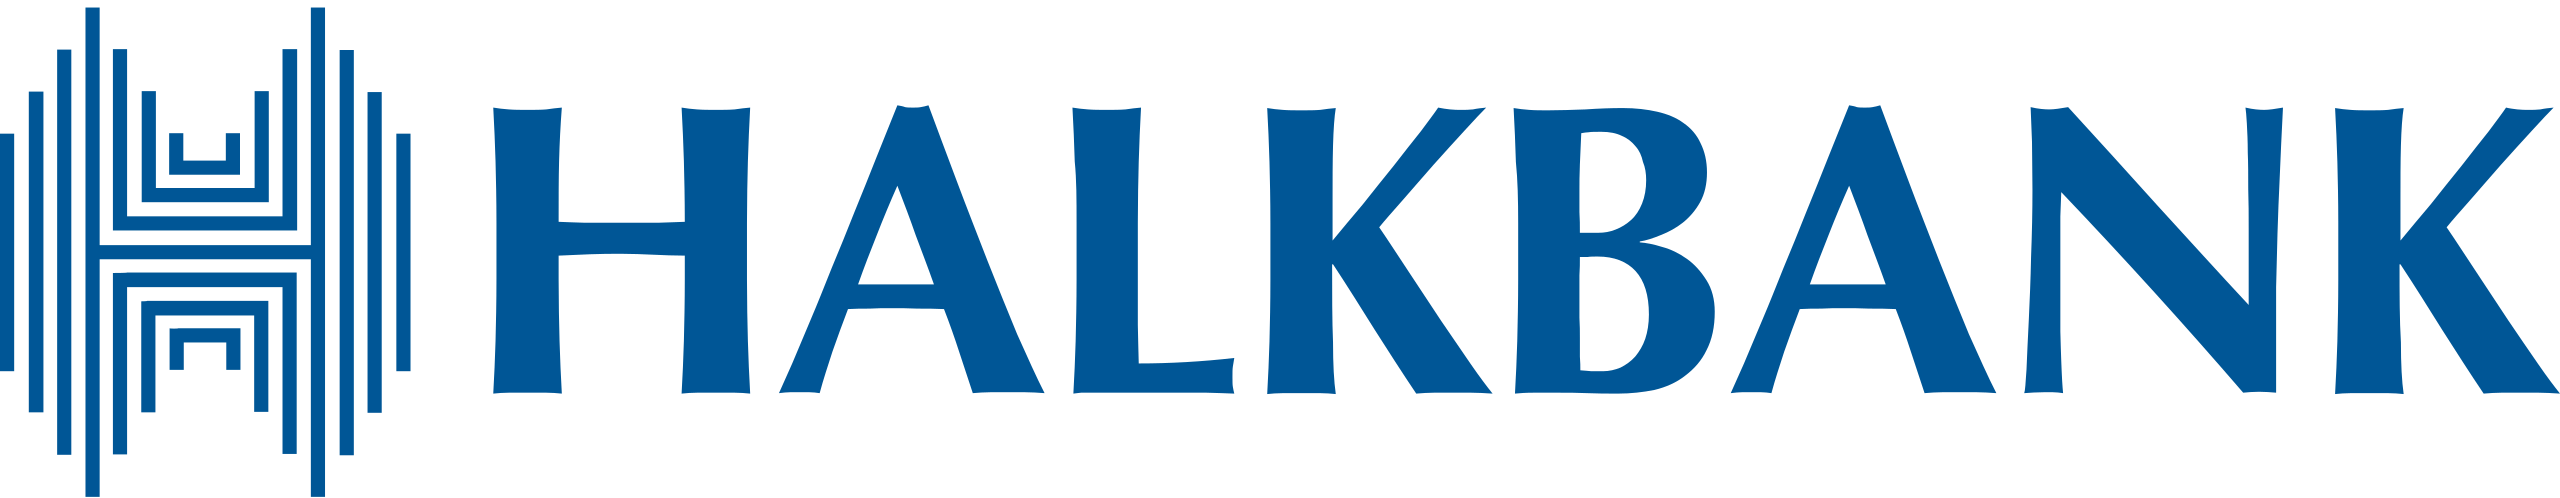 Halkbank_logo.svg-1